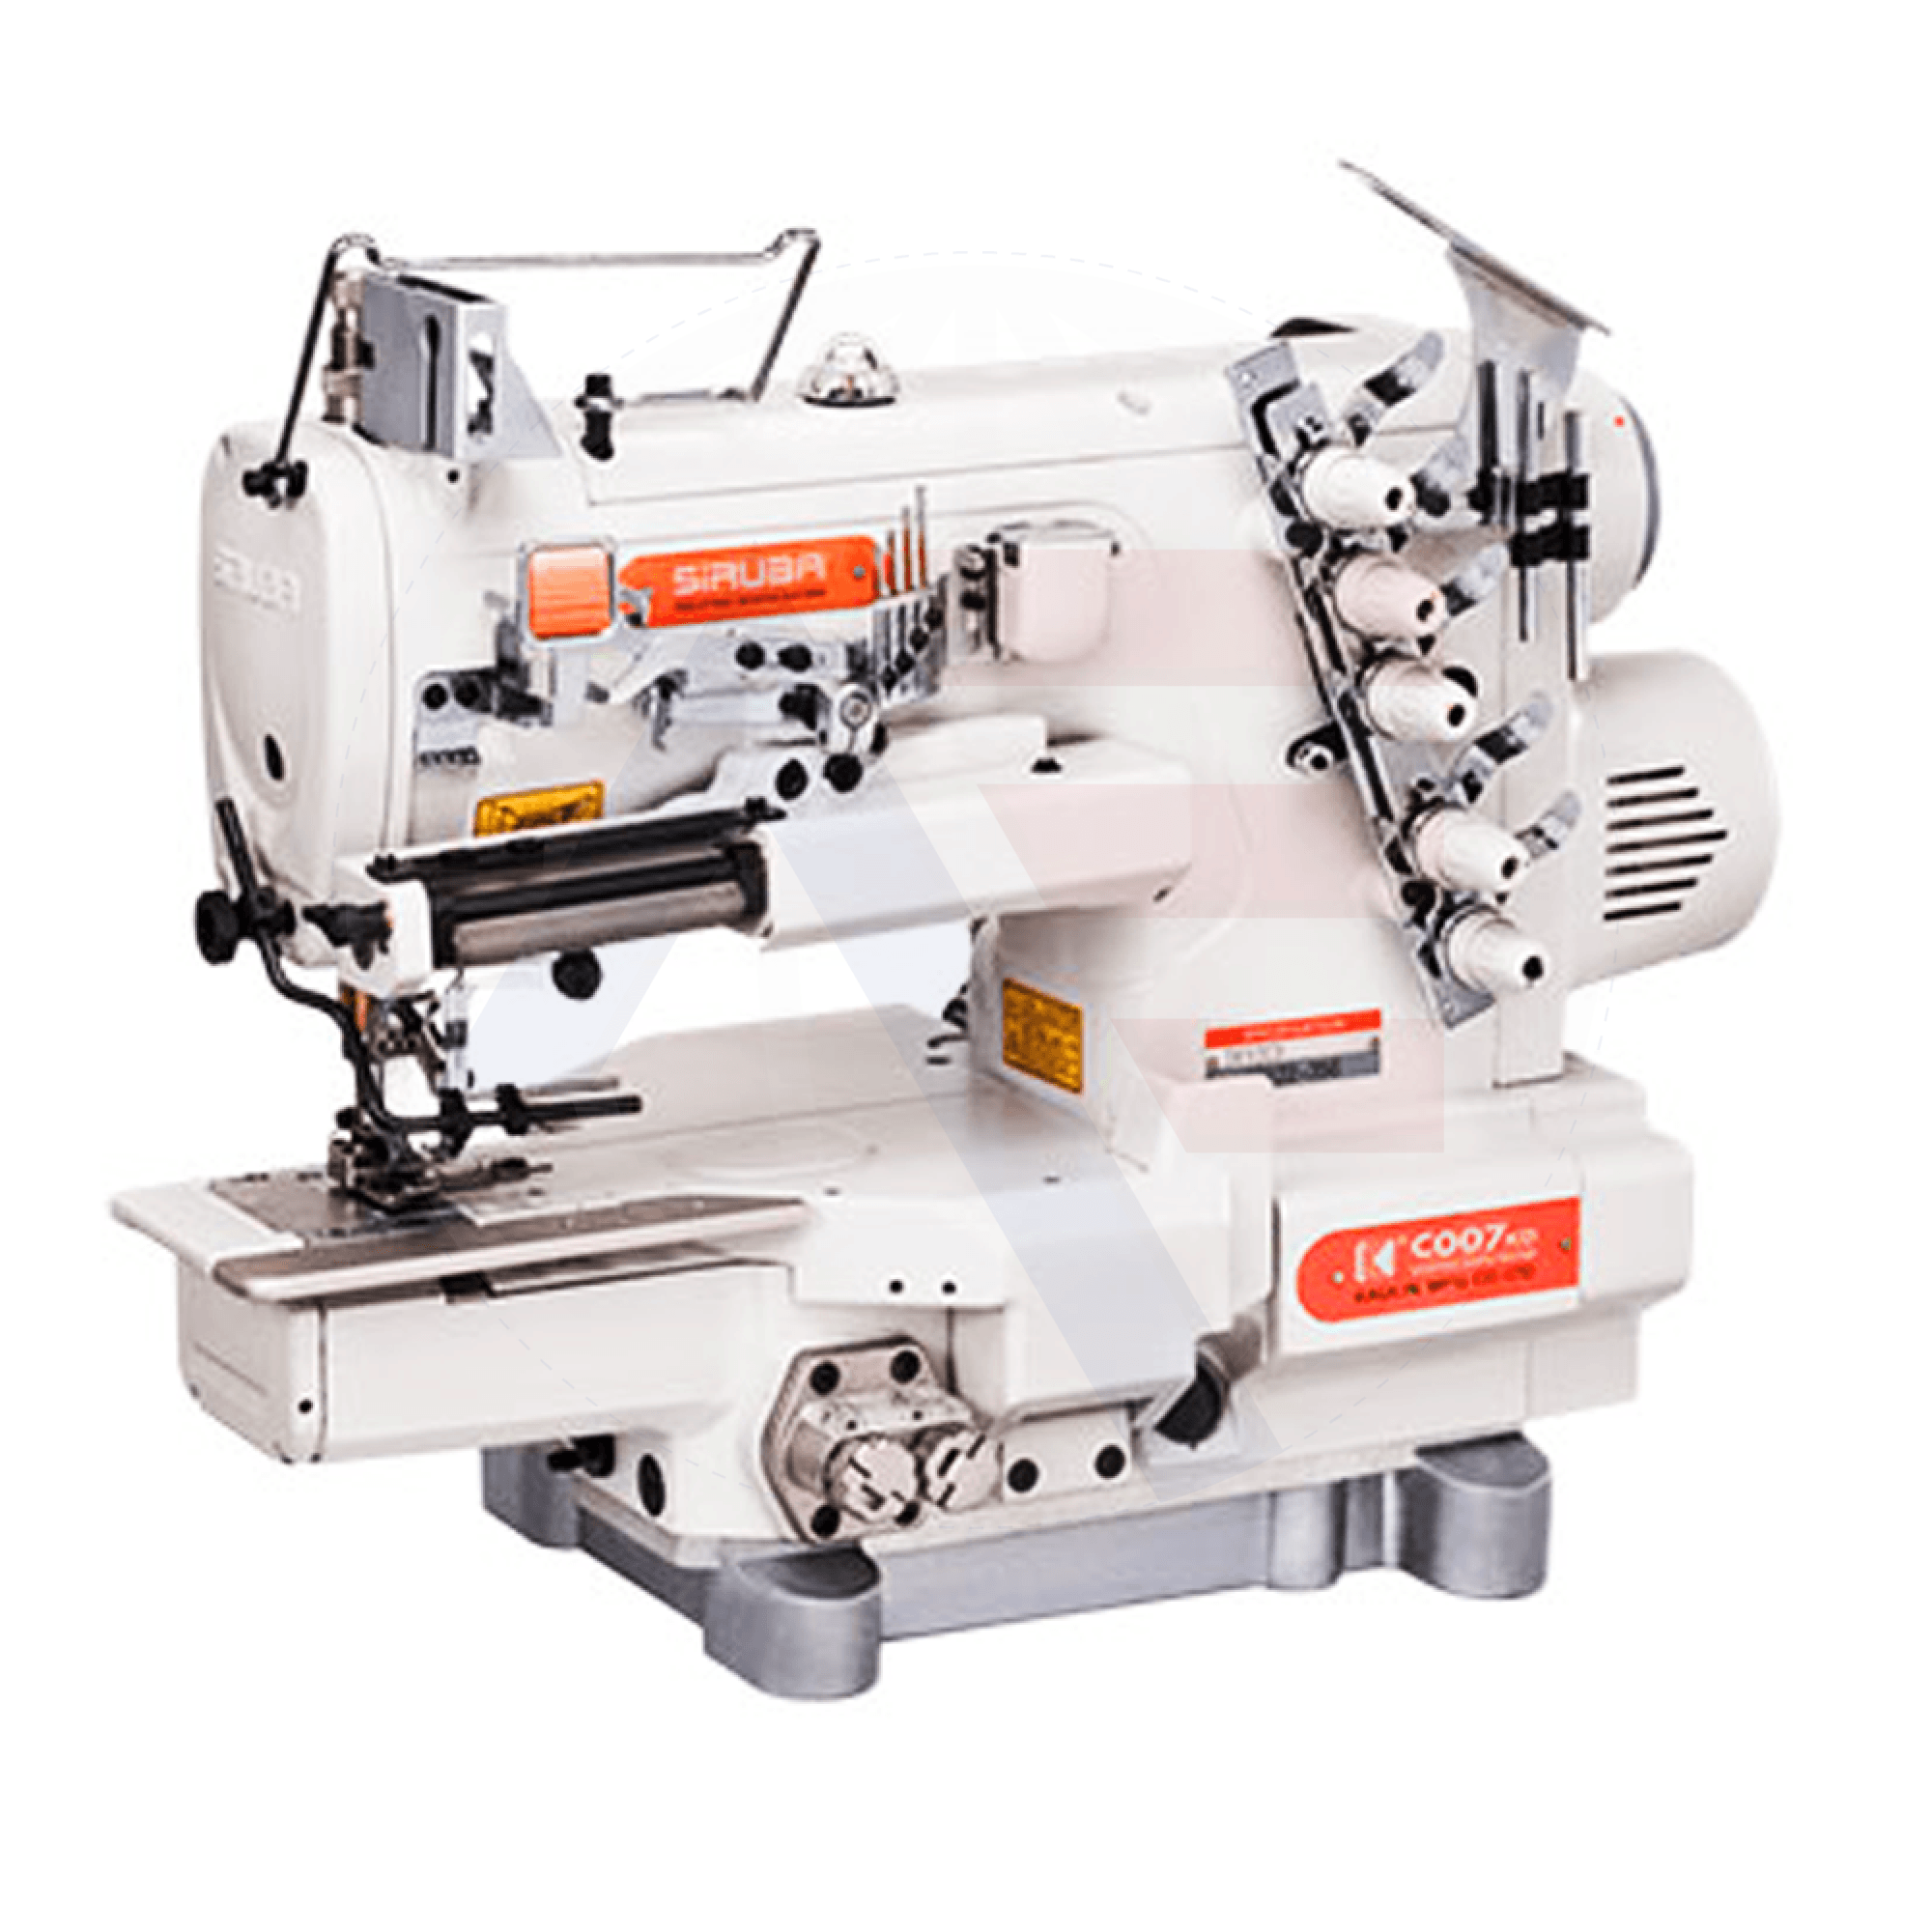 Siruba C007Kd Coverstitch Machine Sewing Machines